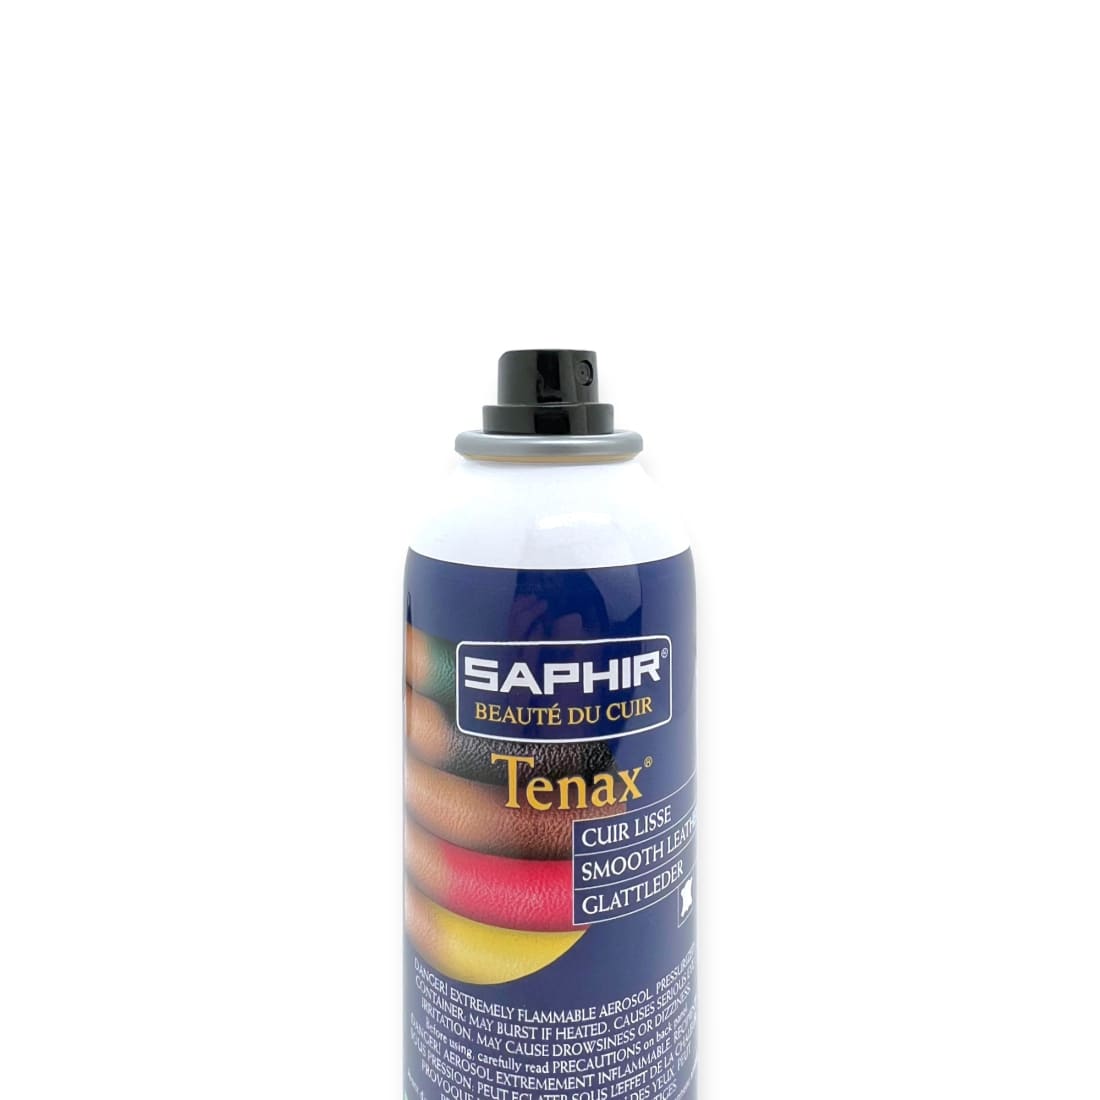 Spray Tenax Teinture Chamois - Saphir - 150 ml - Accessoires